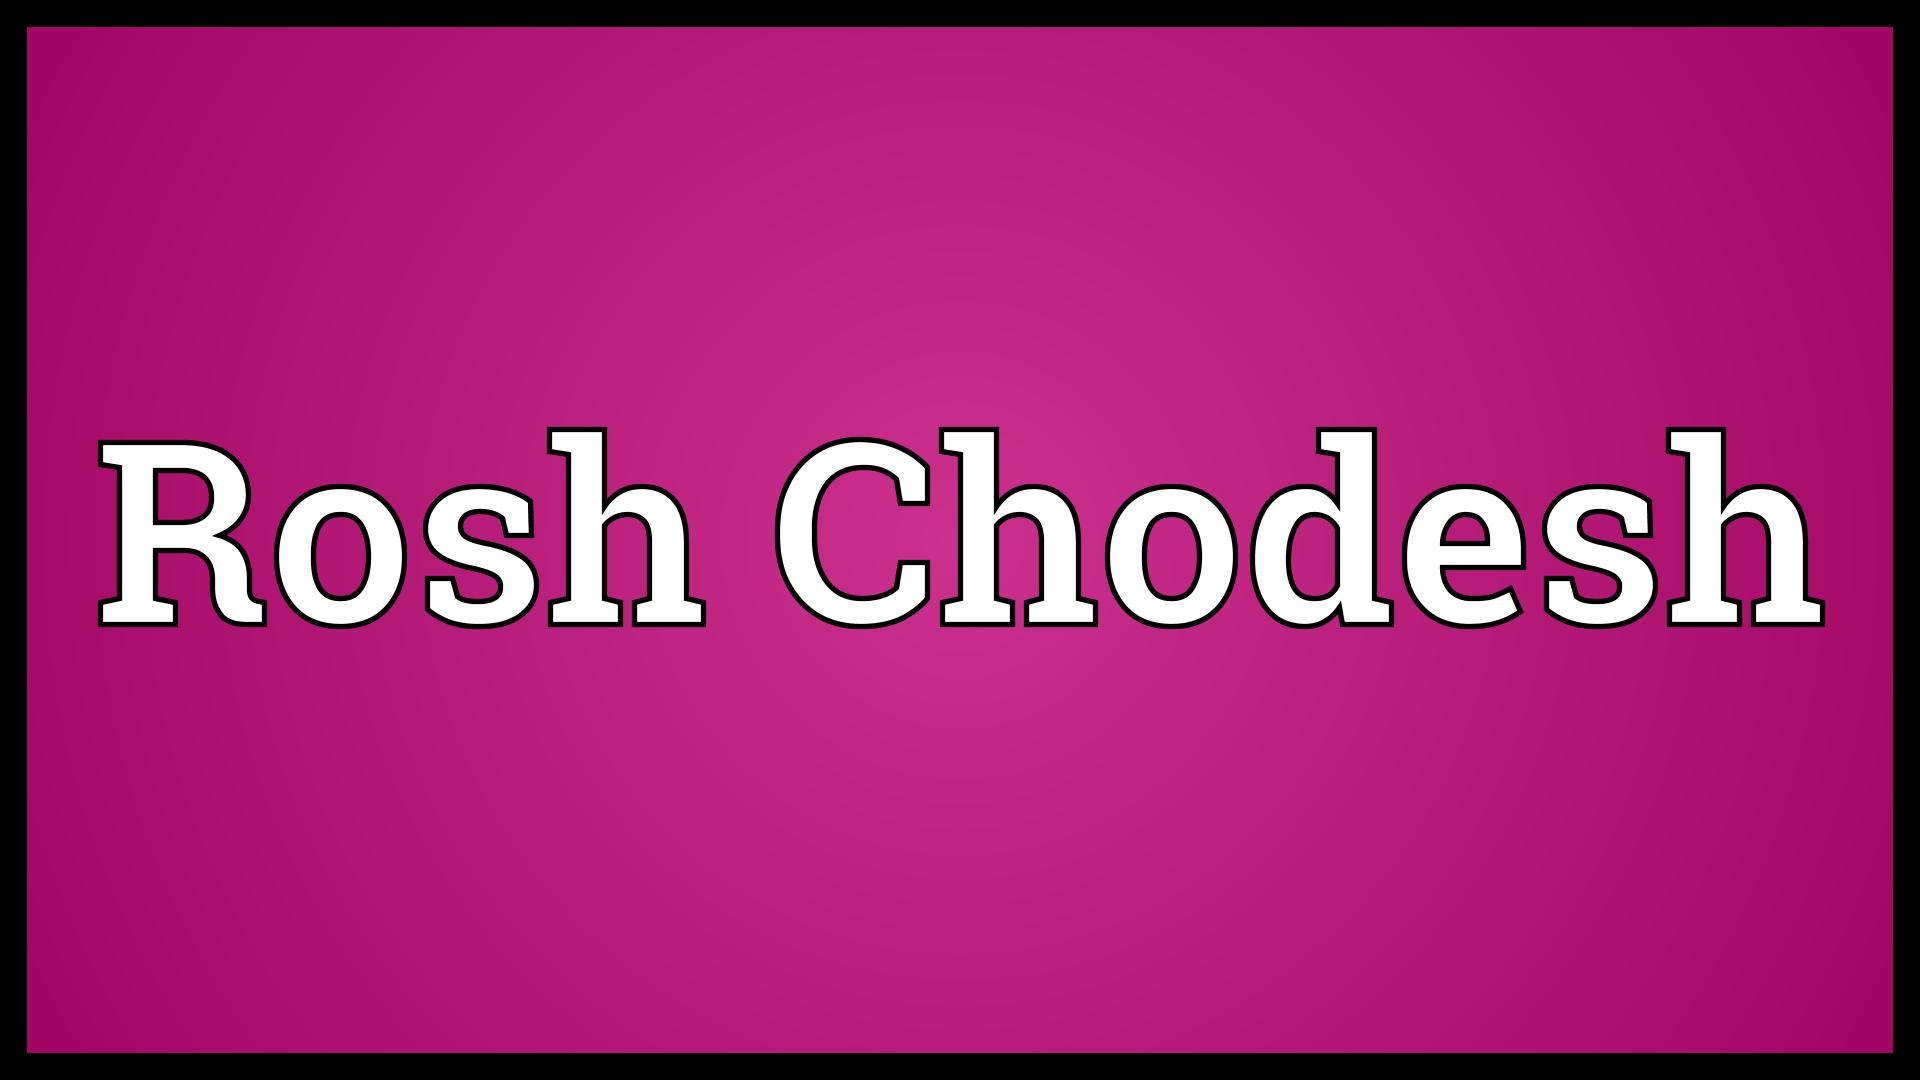 Rosh Chodesh Greetings